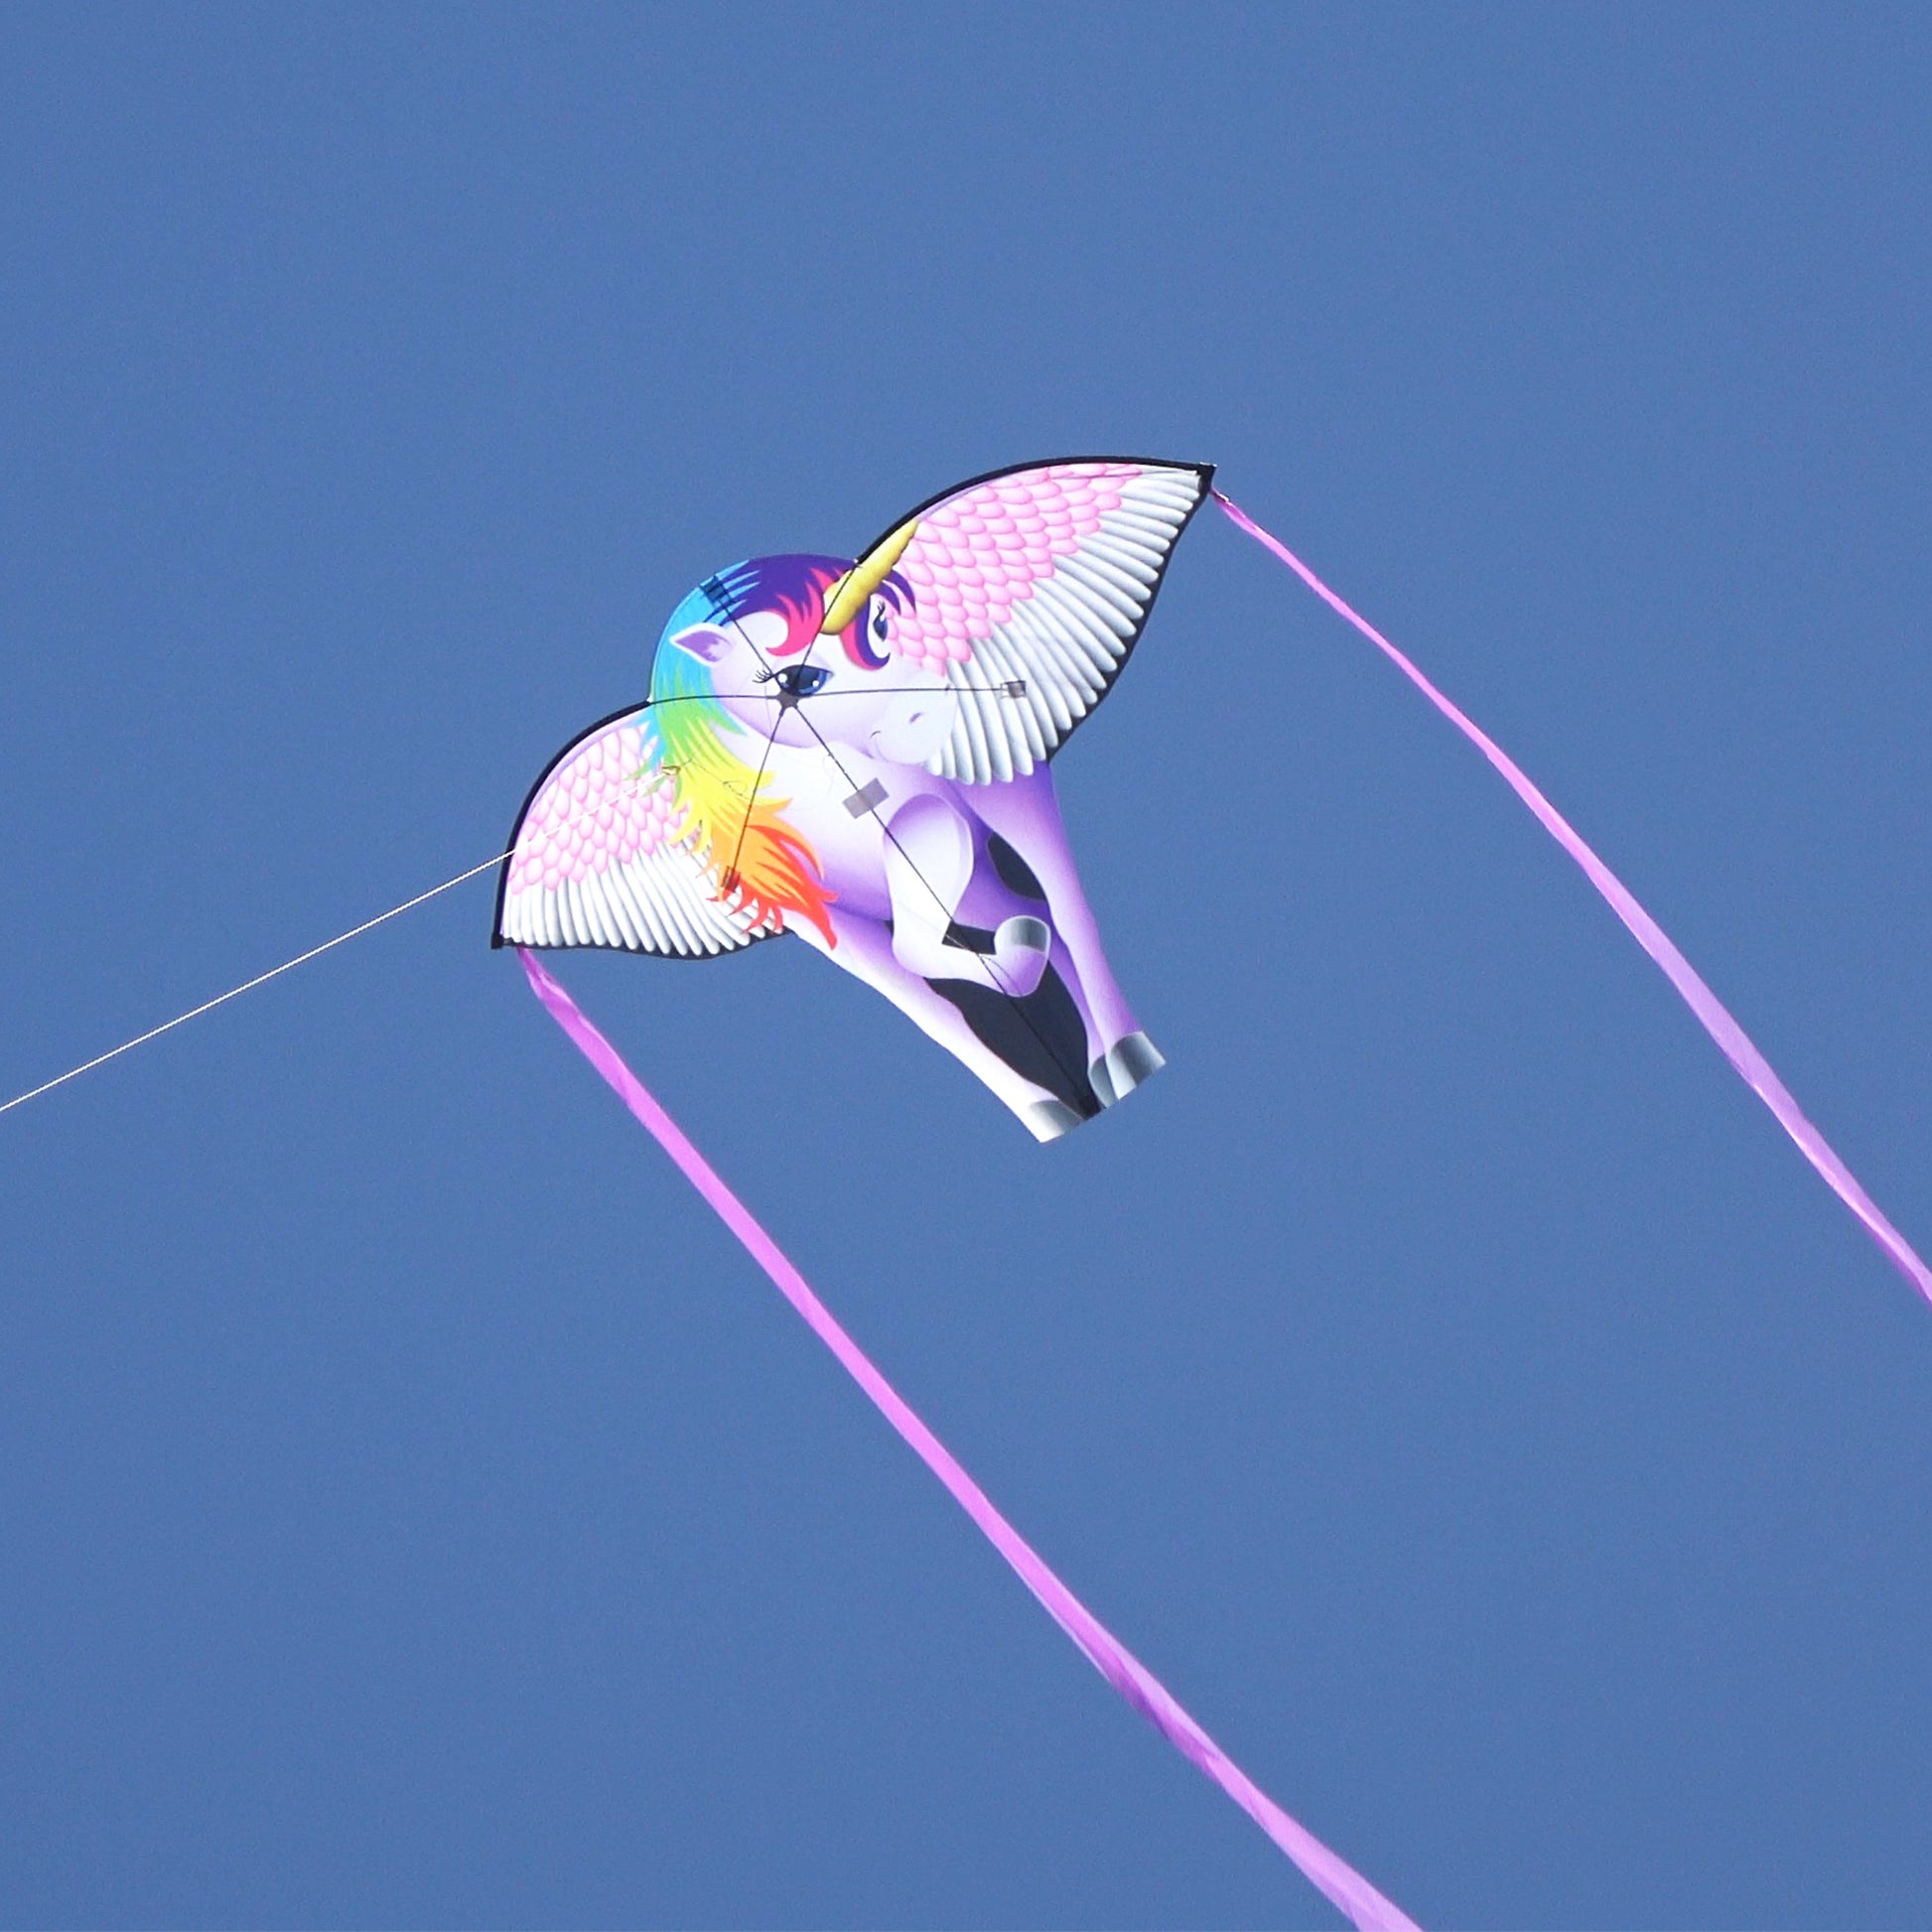 free shipping high quality 6m rainbow windsock kite flying large kites  adult kite reel ripstop nylon kite flying eagle kitsurf